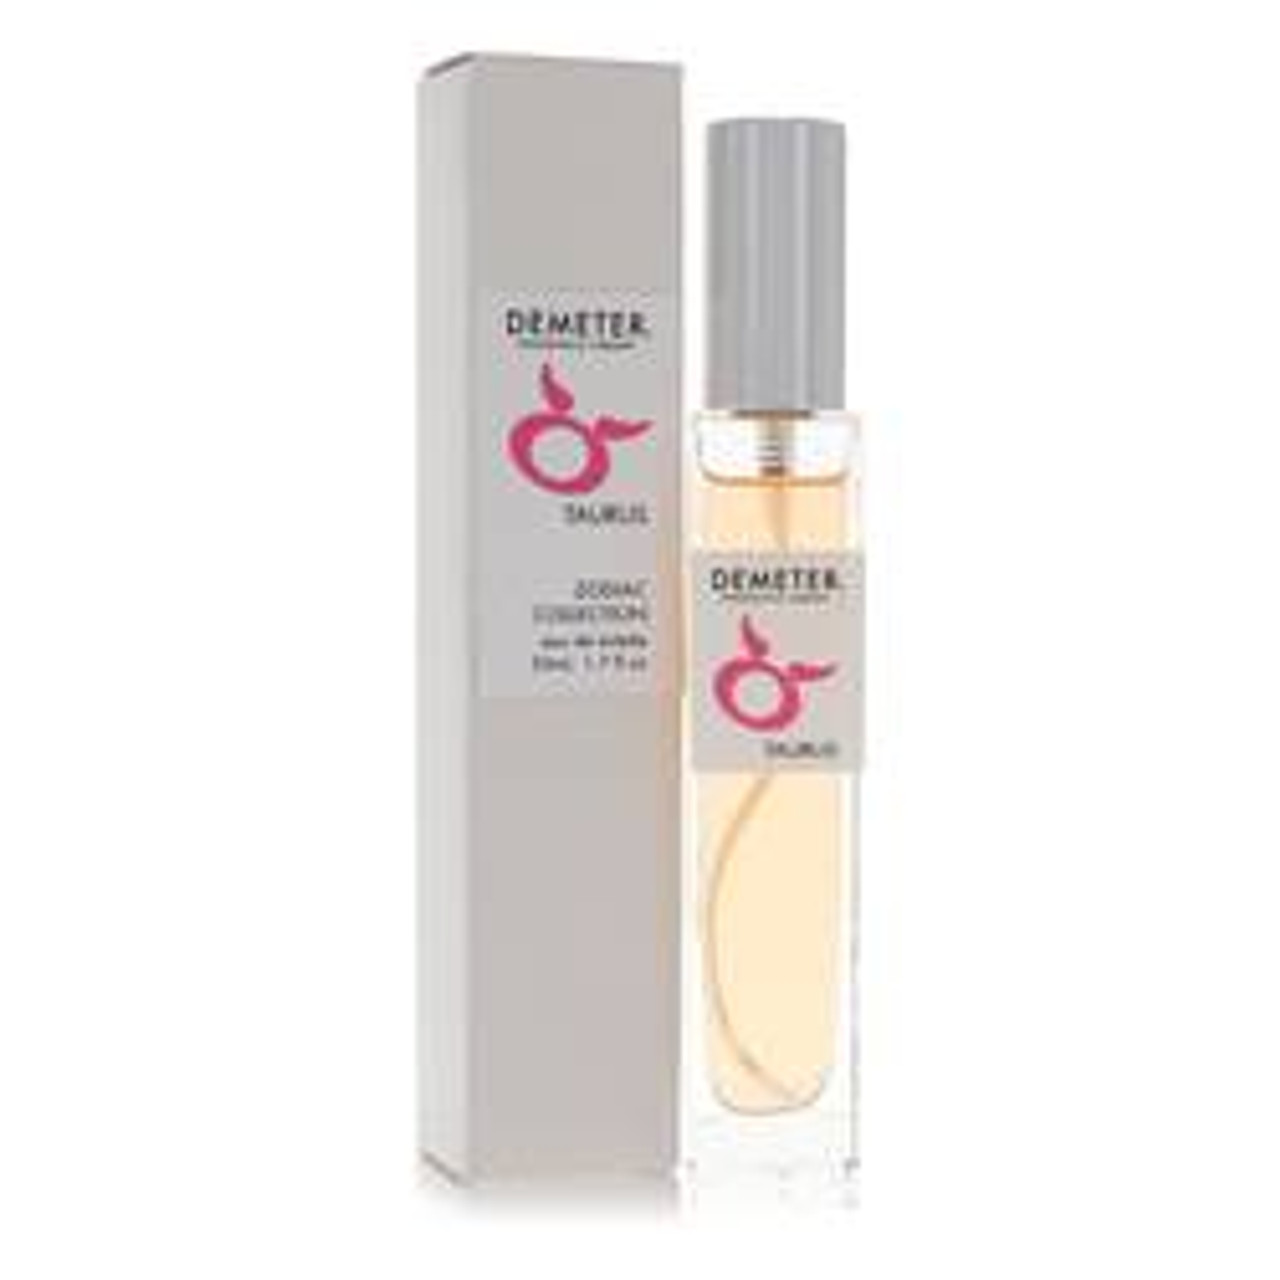 Demeter Taurus Perfume By Demeter Eau De Toilette Spray 1.7 oz for Women - [From 50.33 - Choose pk Qty ] - *Ships from Miami